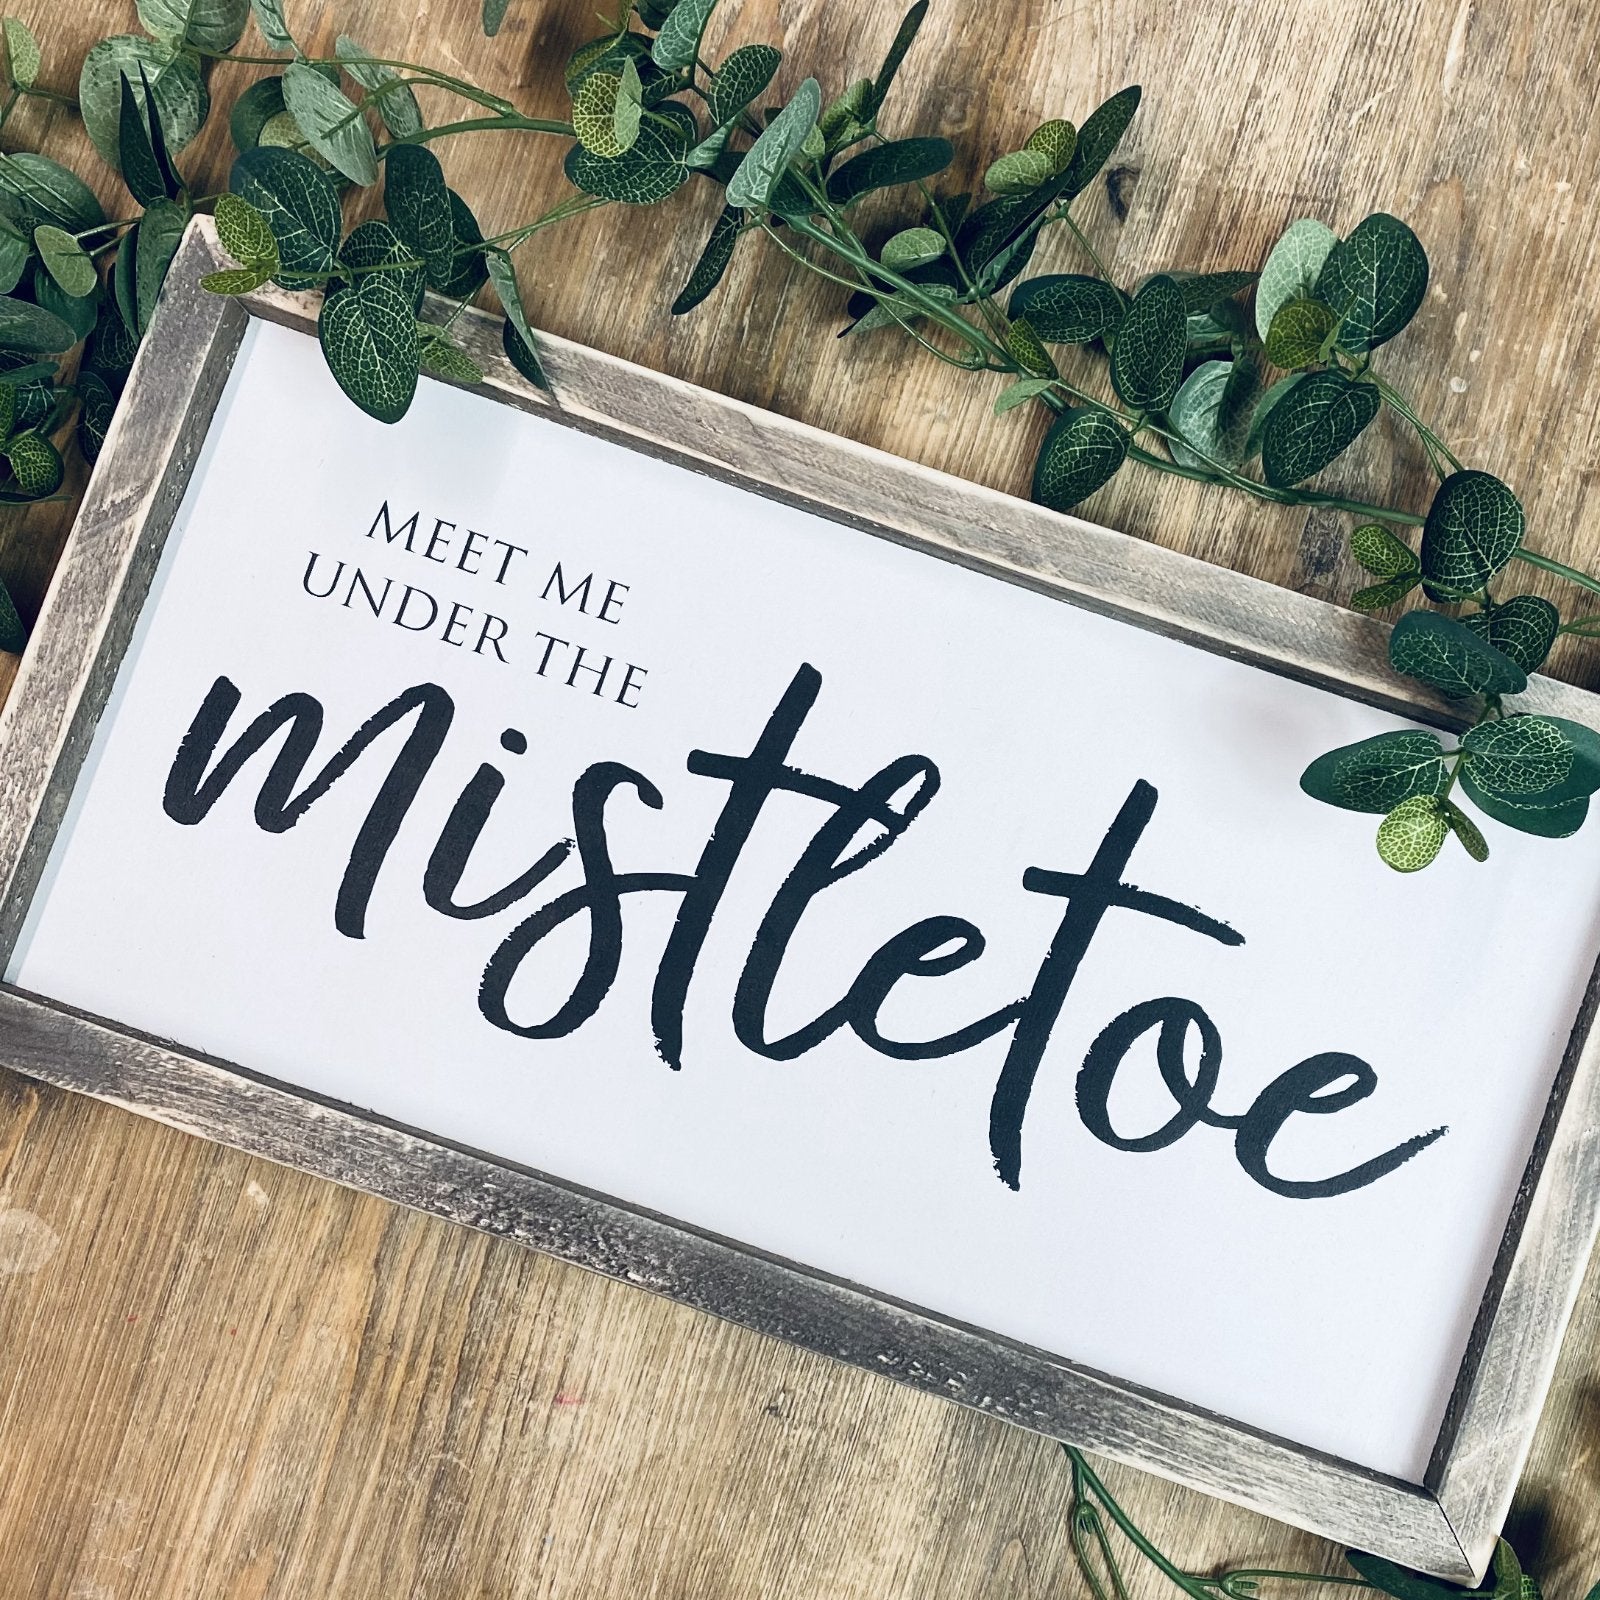 Meet me under the Mistletoe | Framed Wood Sign - The Imperfect Wood Company - Framed Wood Sign